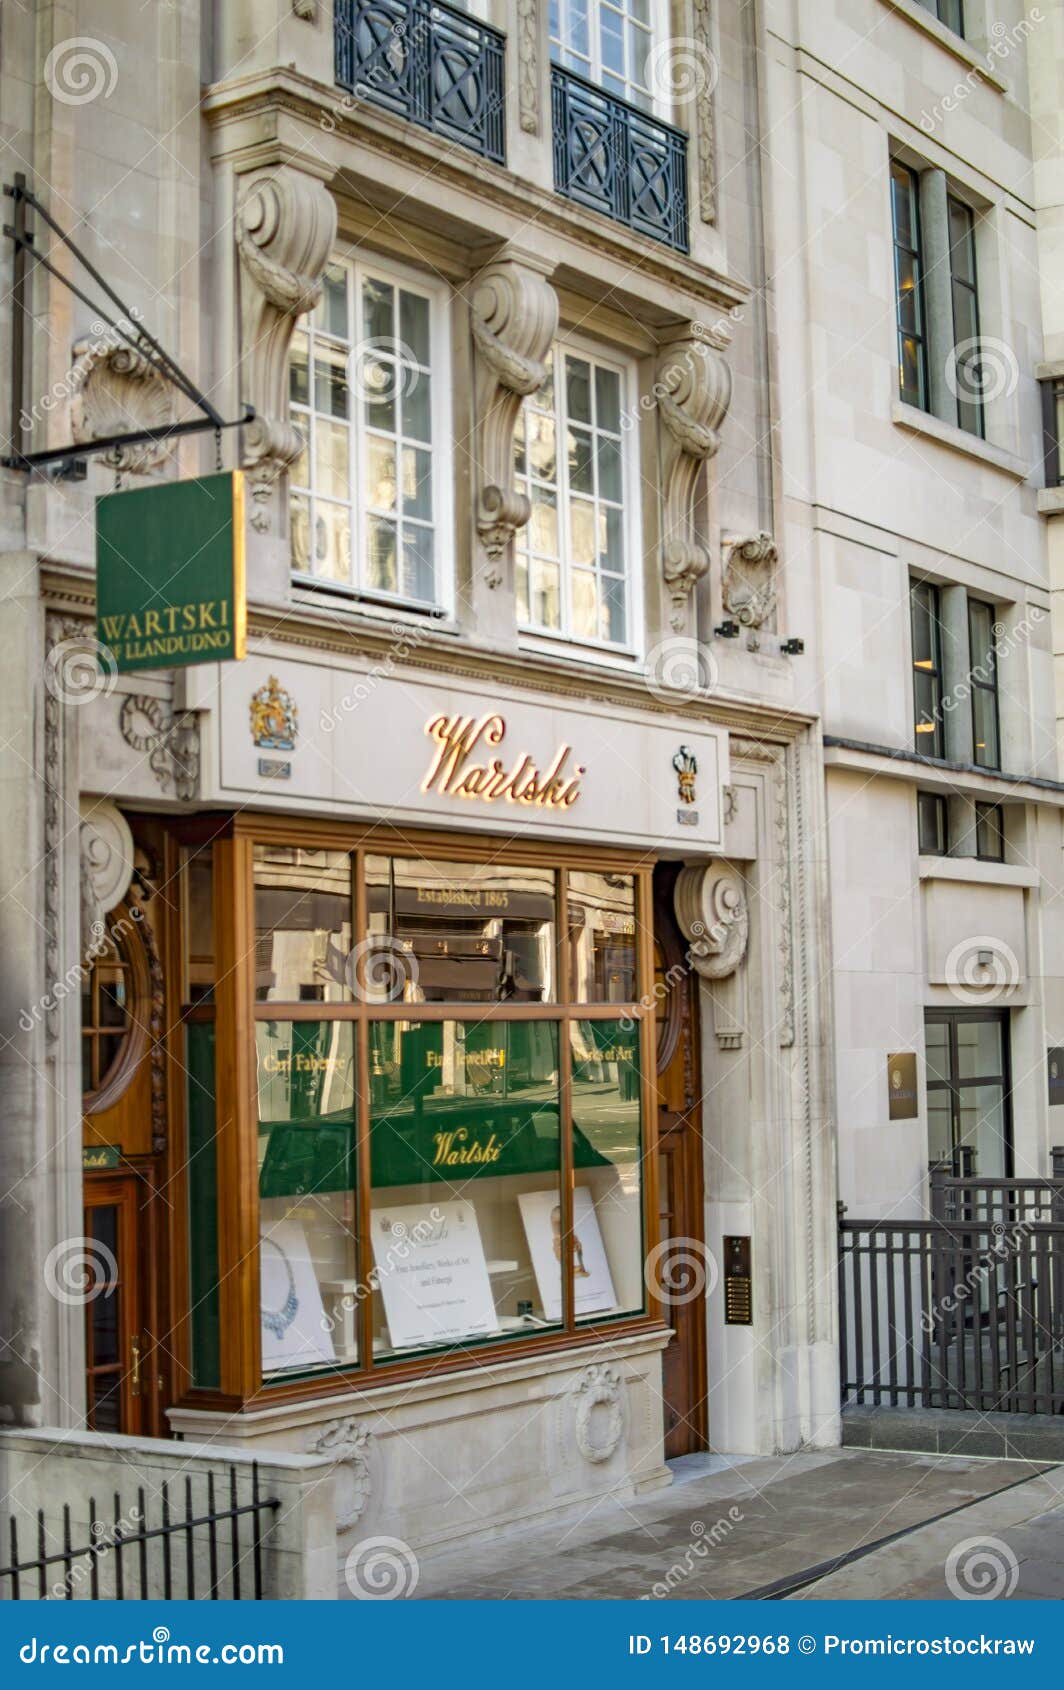 Jewellery Store in London - James St